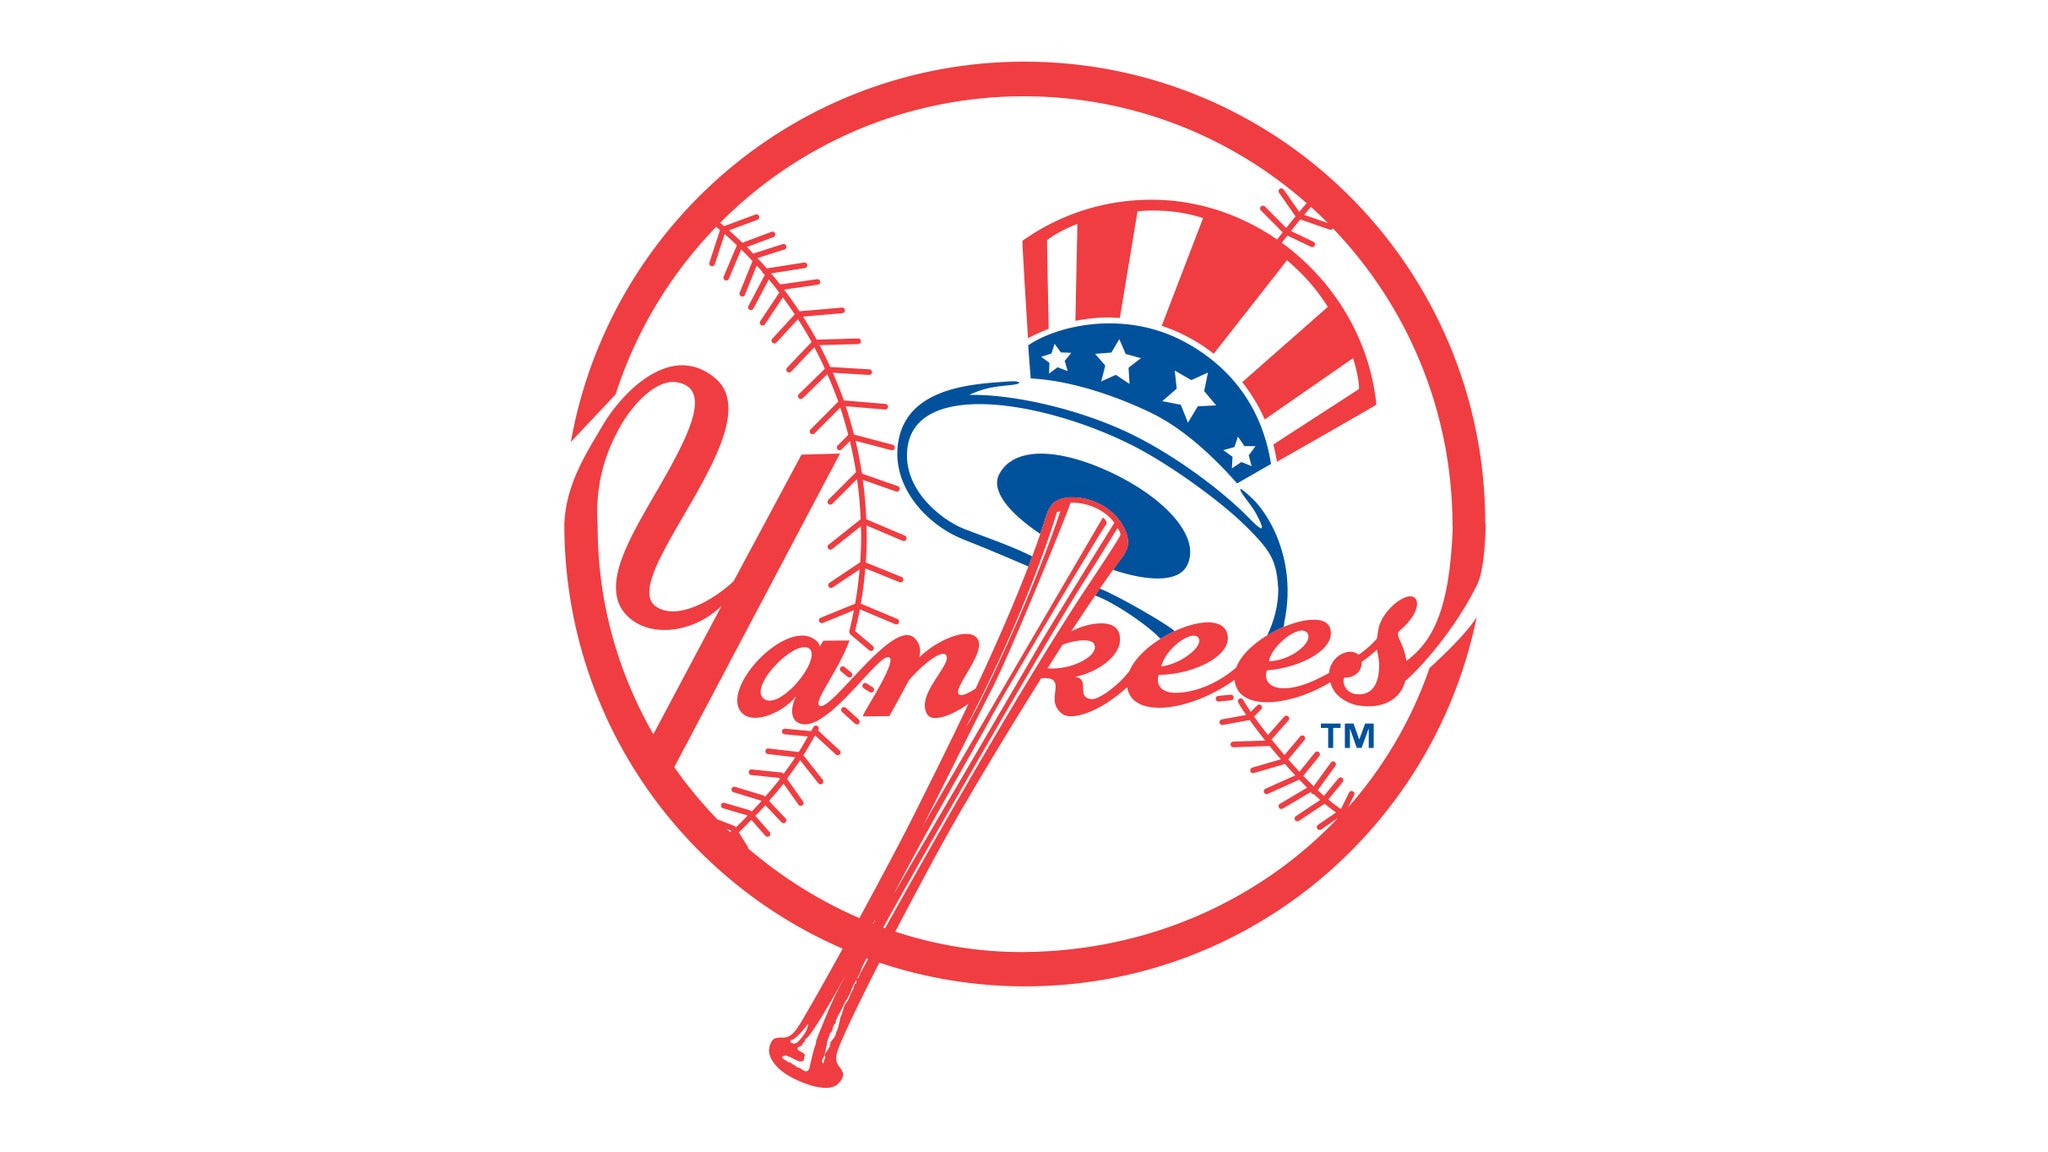 New York Yankees v. Chicago White Sox * Premium Seating